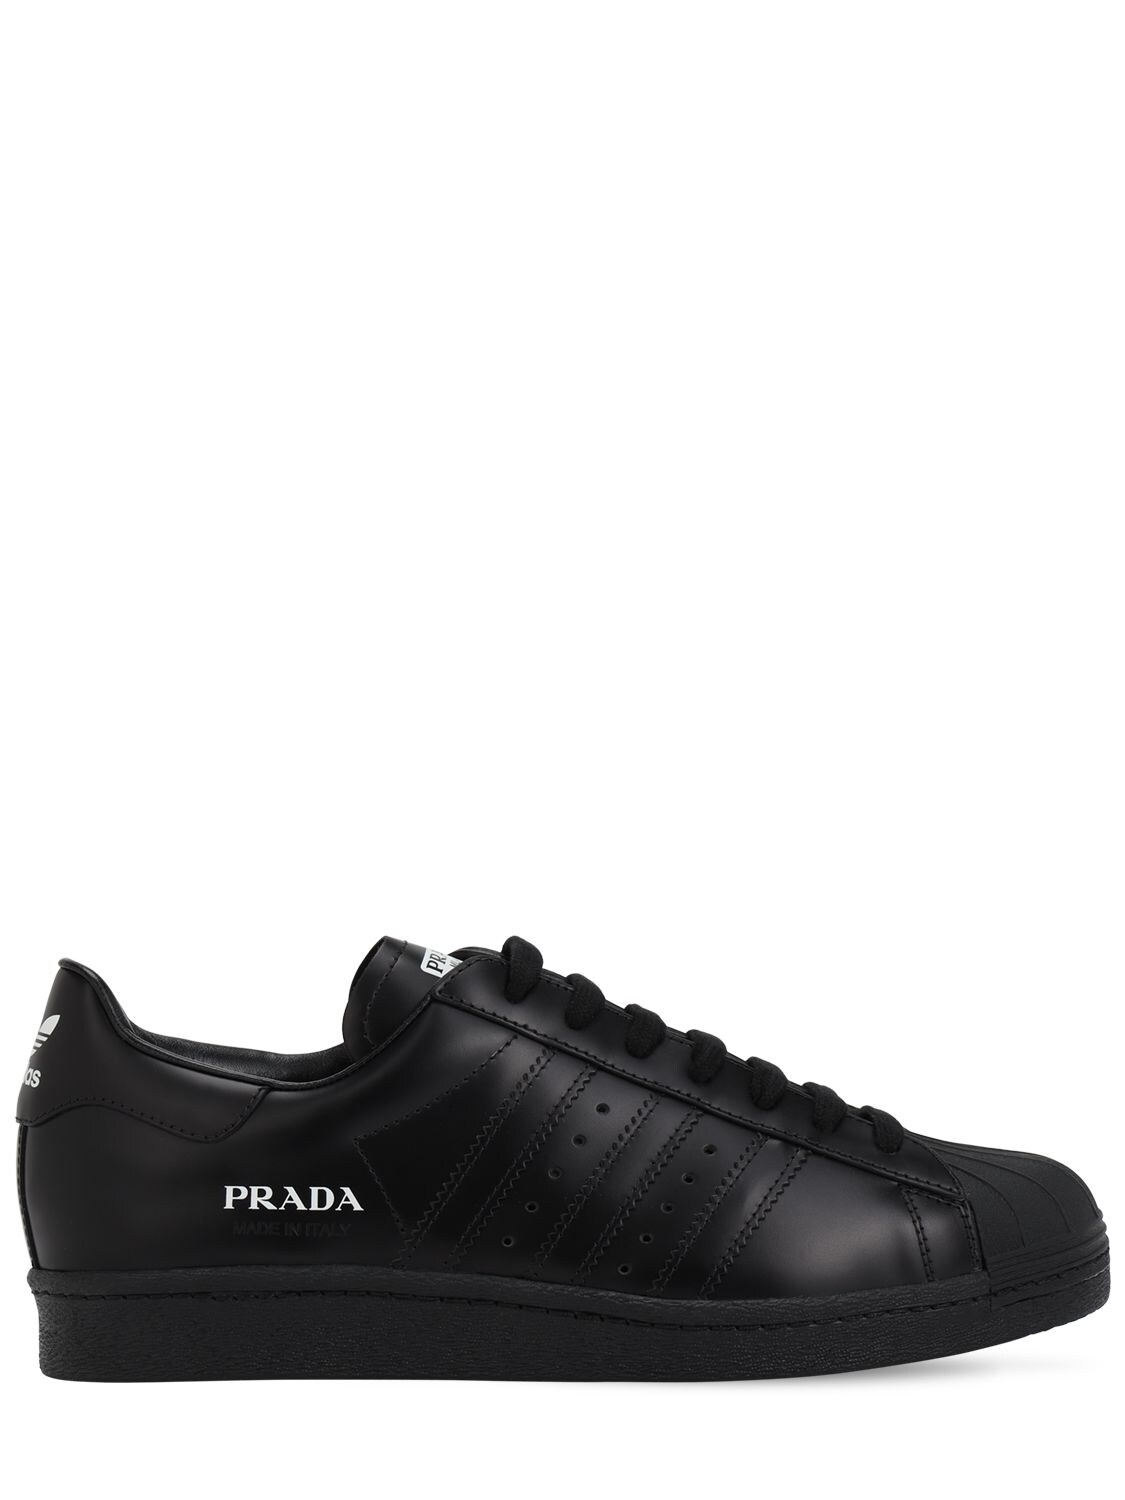 ADIDAS X PRADA “PRADA SUPERSTAR”皮革运动鞋,71IWND003-Q0JMQUNL0